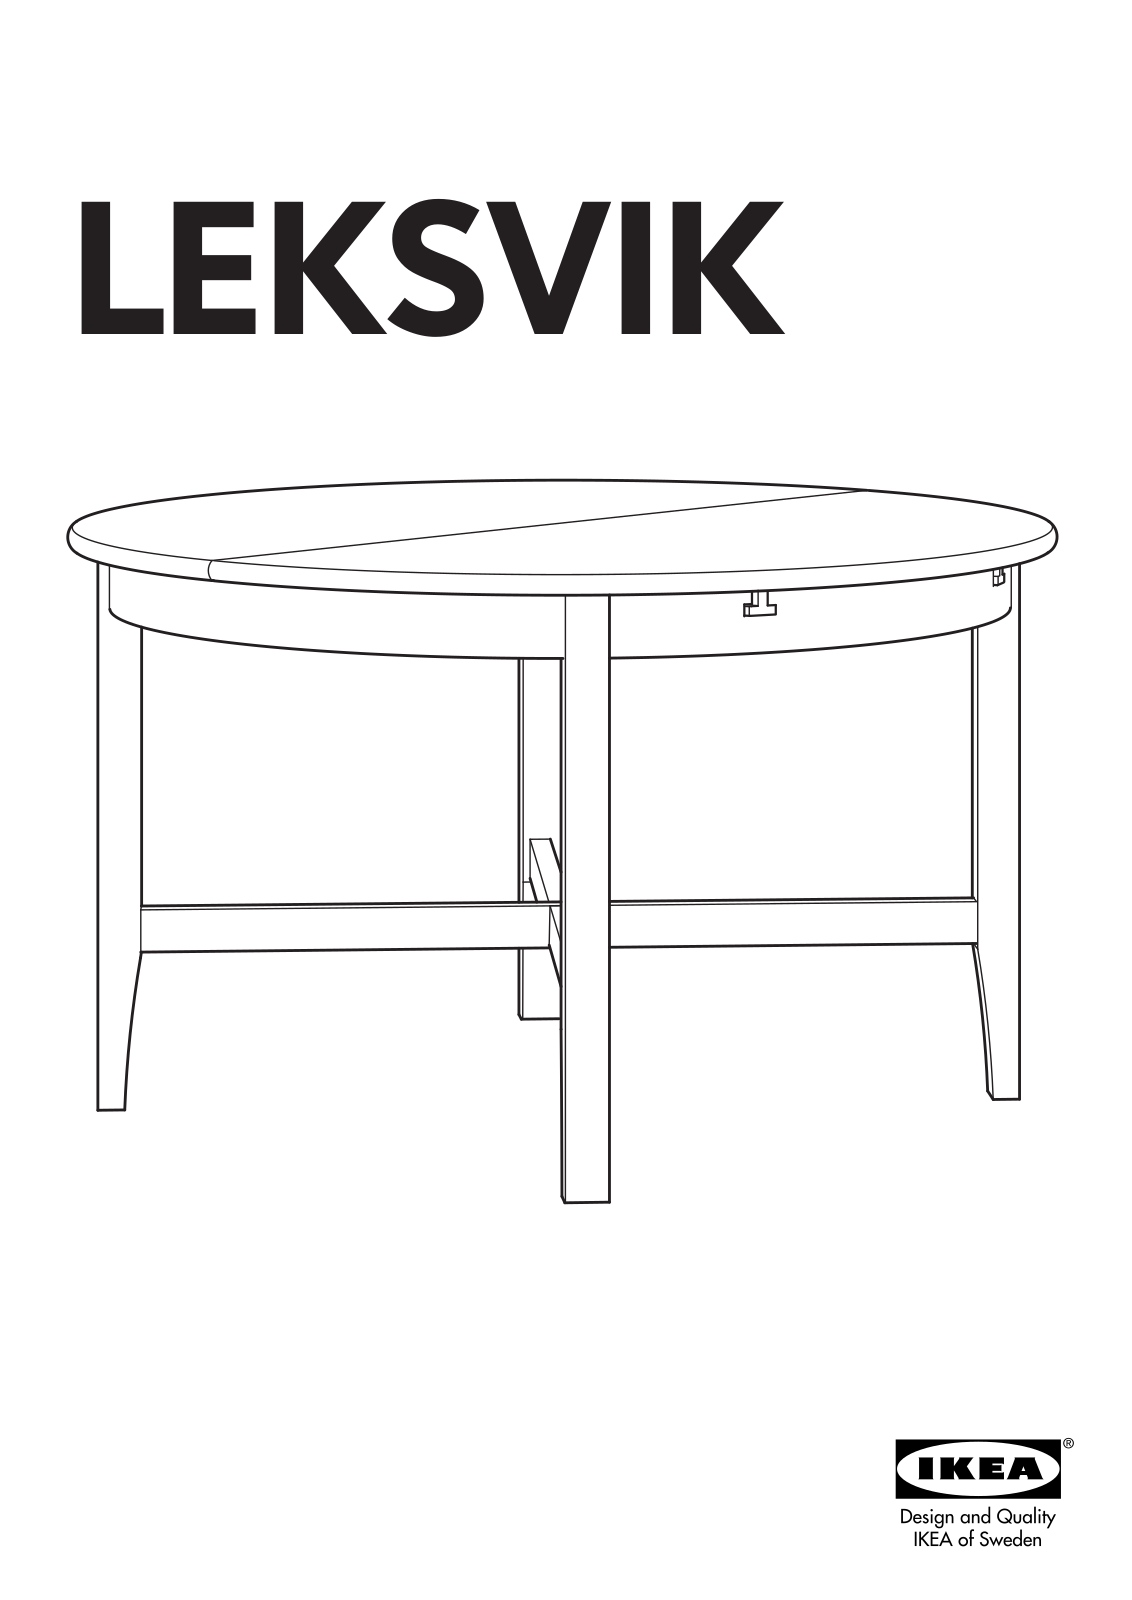 Ikea leksvik стол инструкция